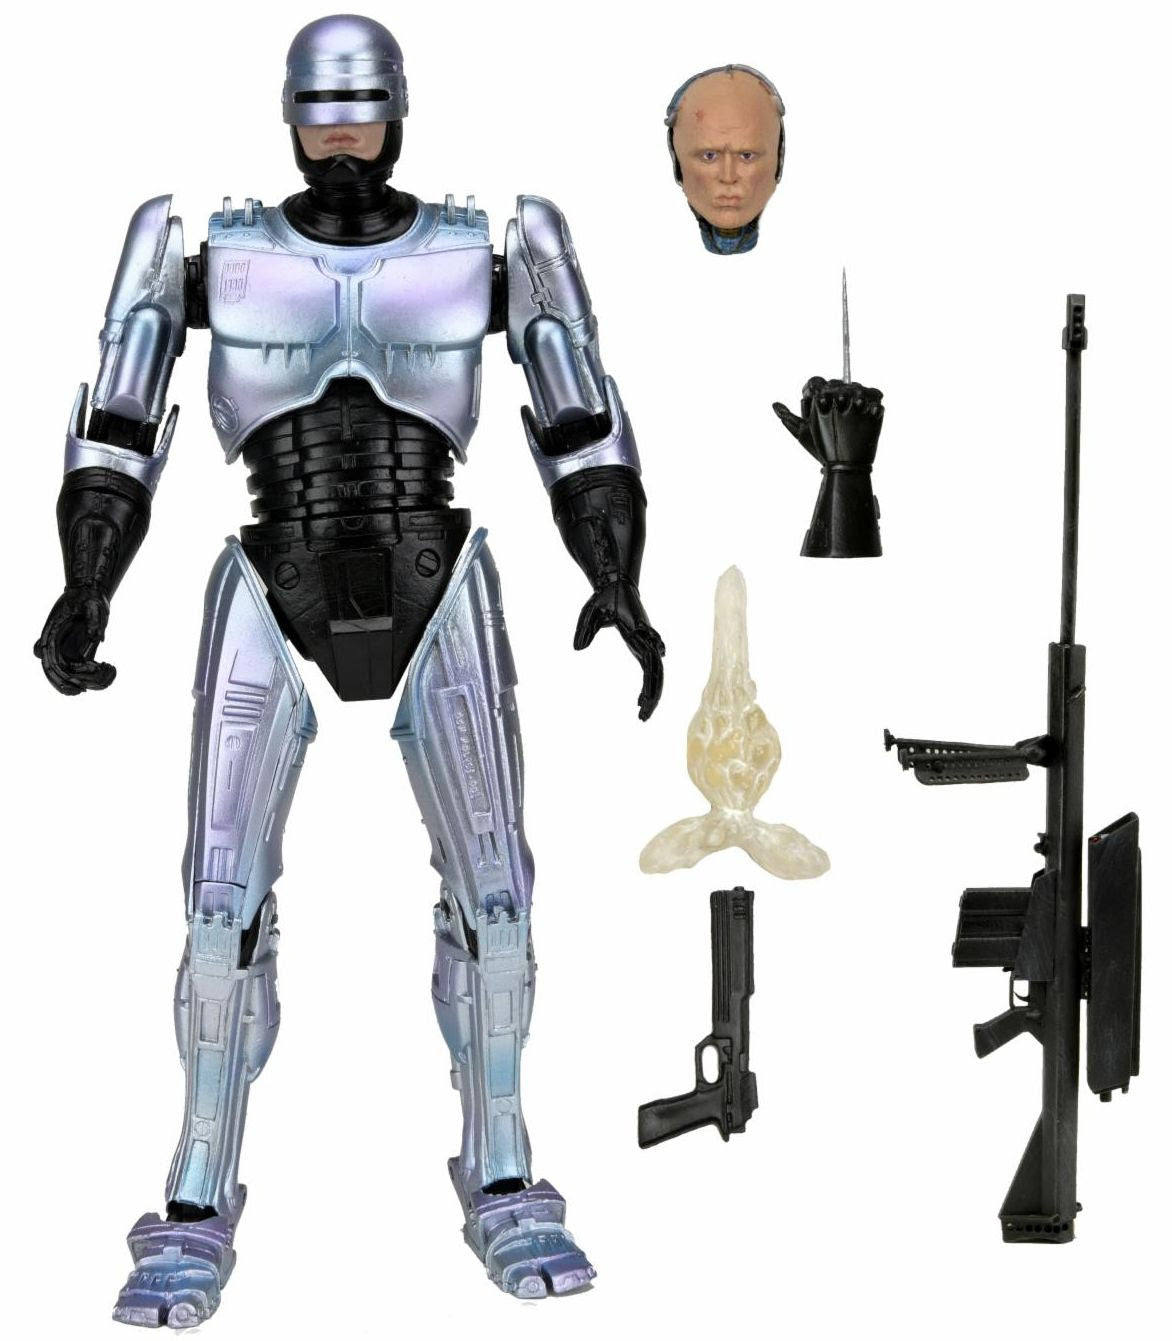 NECA - RoboCop - 7" Scale Action Figure - Ultimate RoboCop